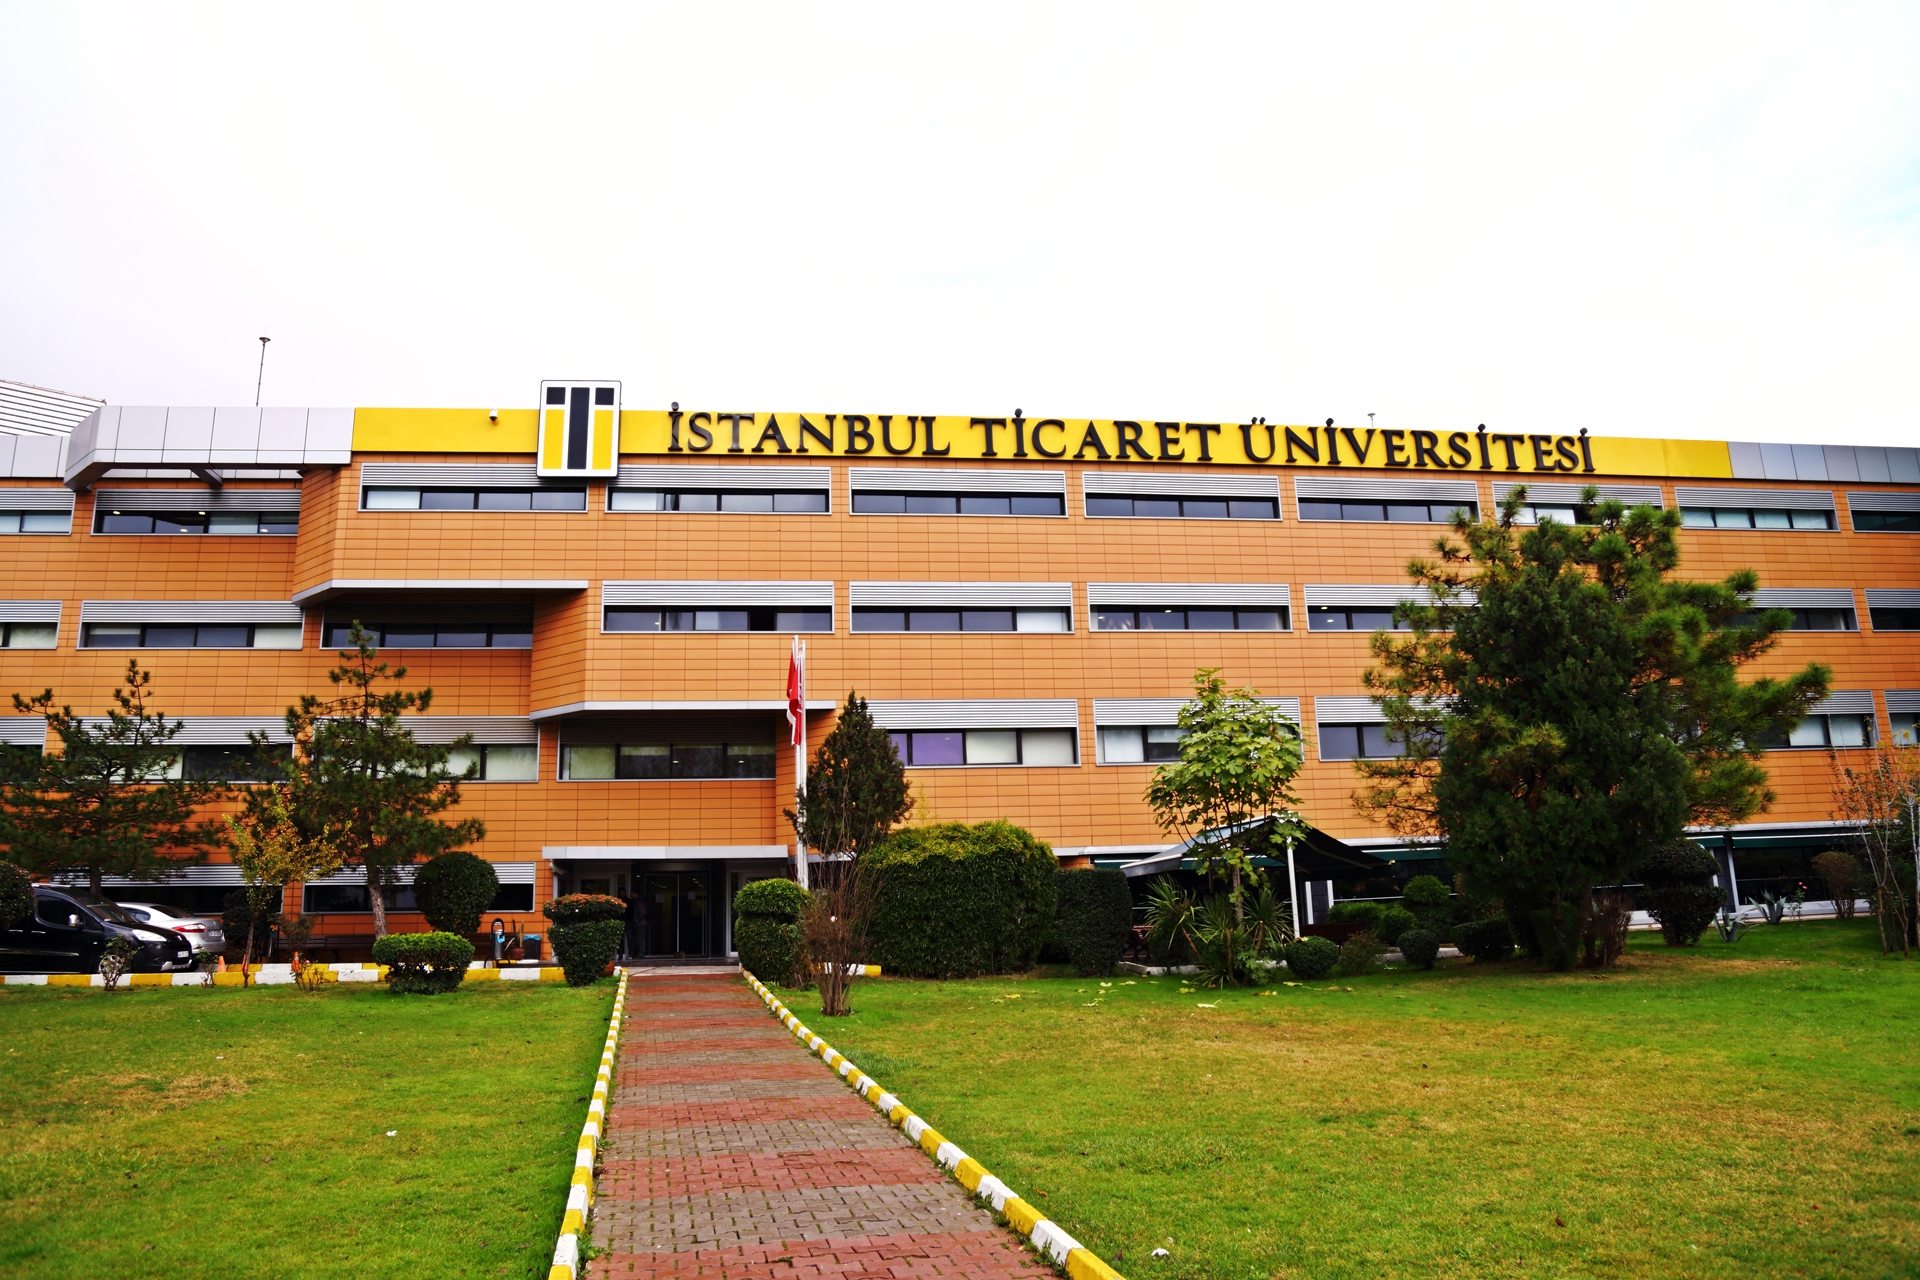 ticaret universitesi find and study 2 - Istanbul Commerce University